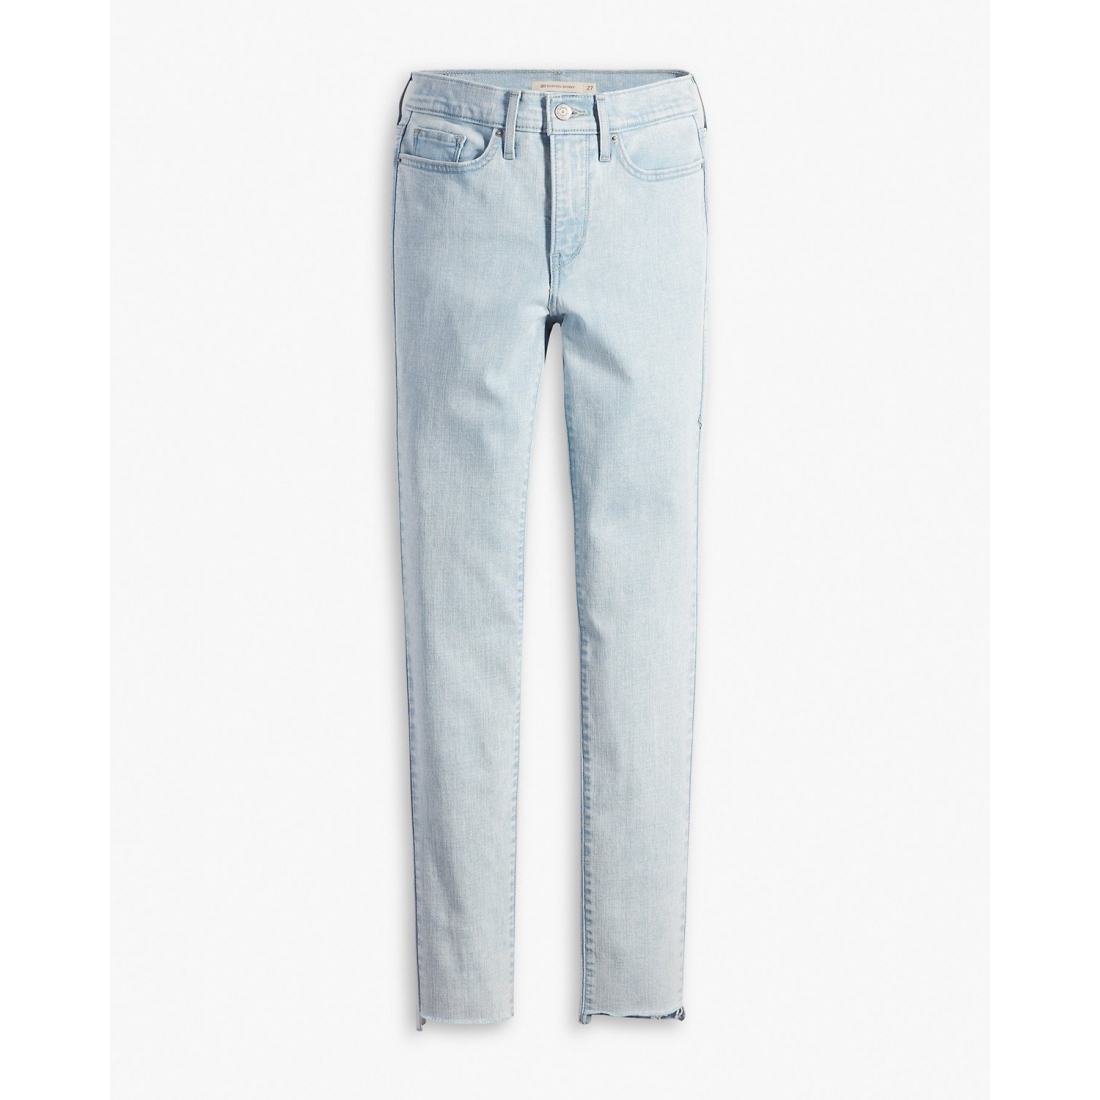 Women's '311 Shaping' Skinny Jeans